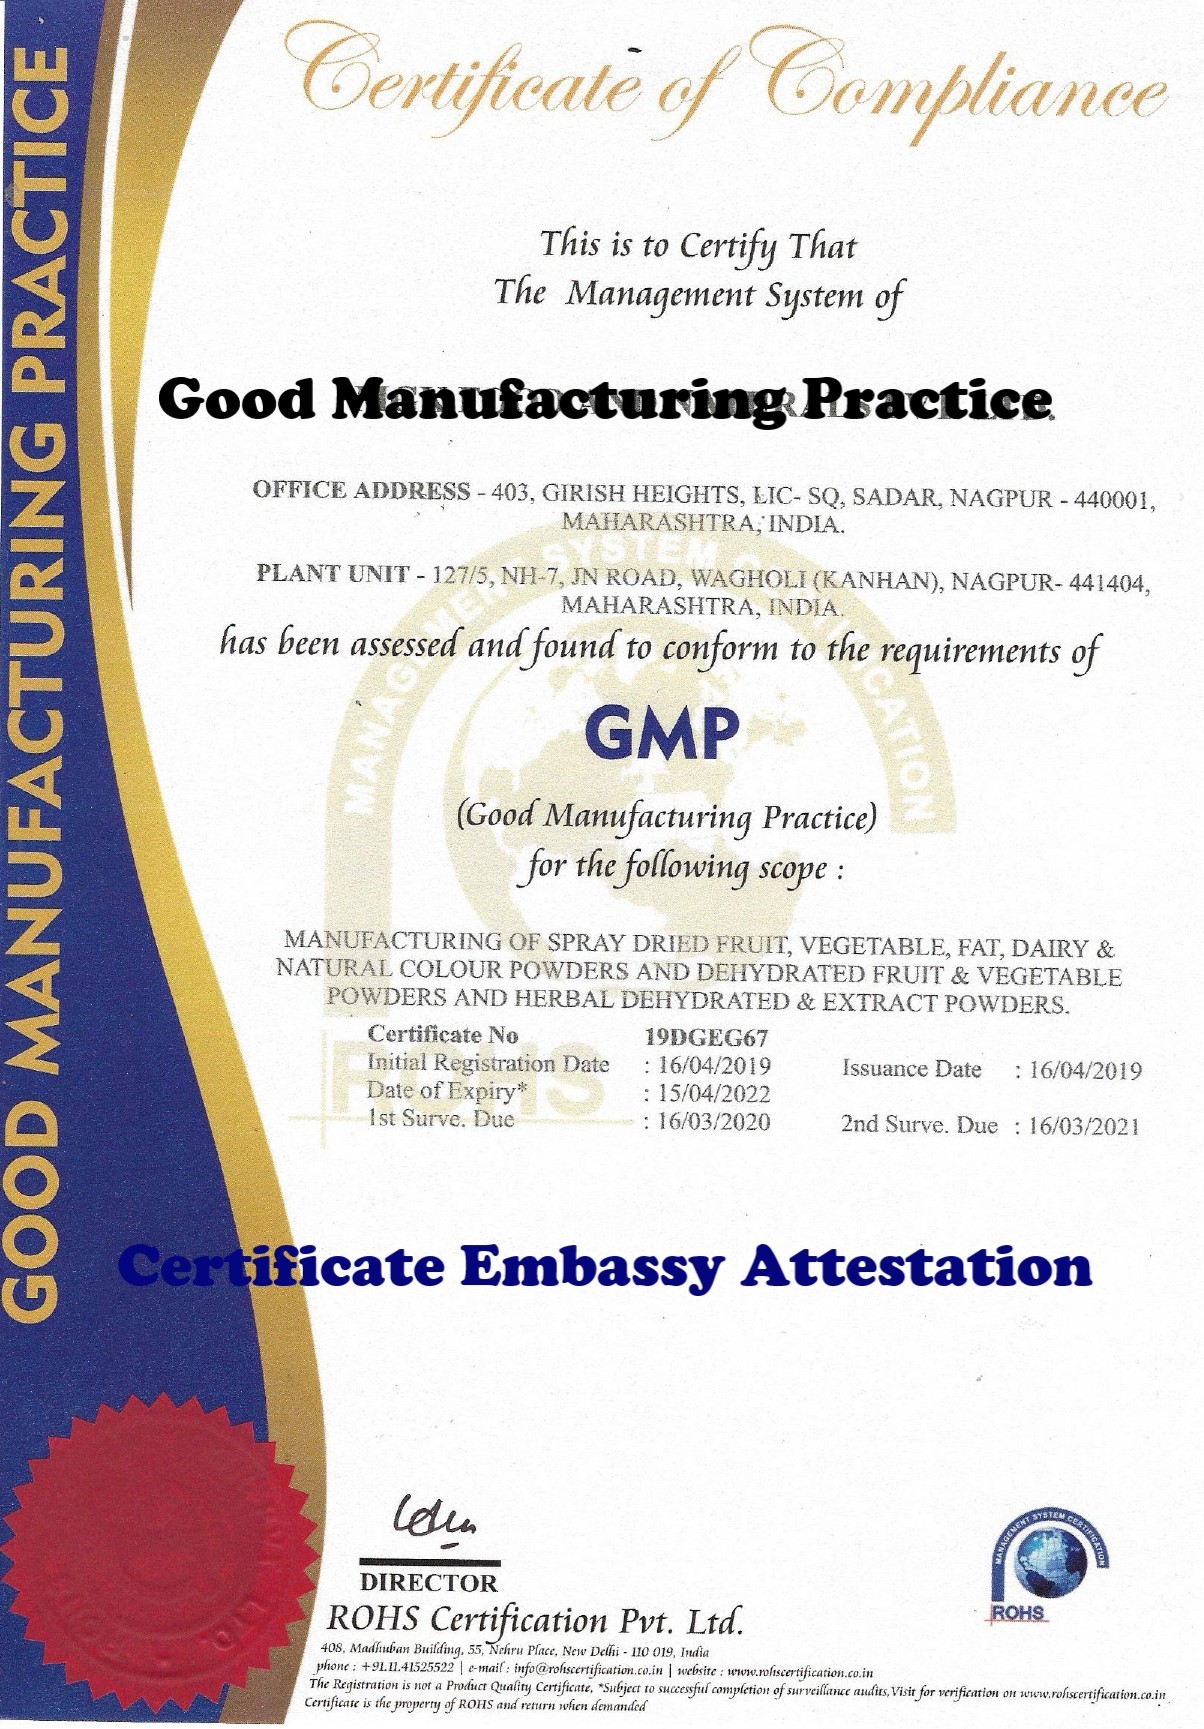 GMP Certificate Attestation from Azerbaijan Embassy